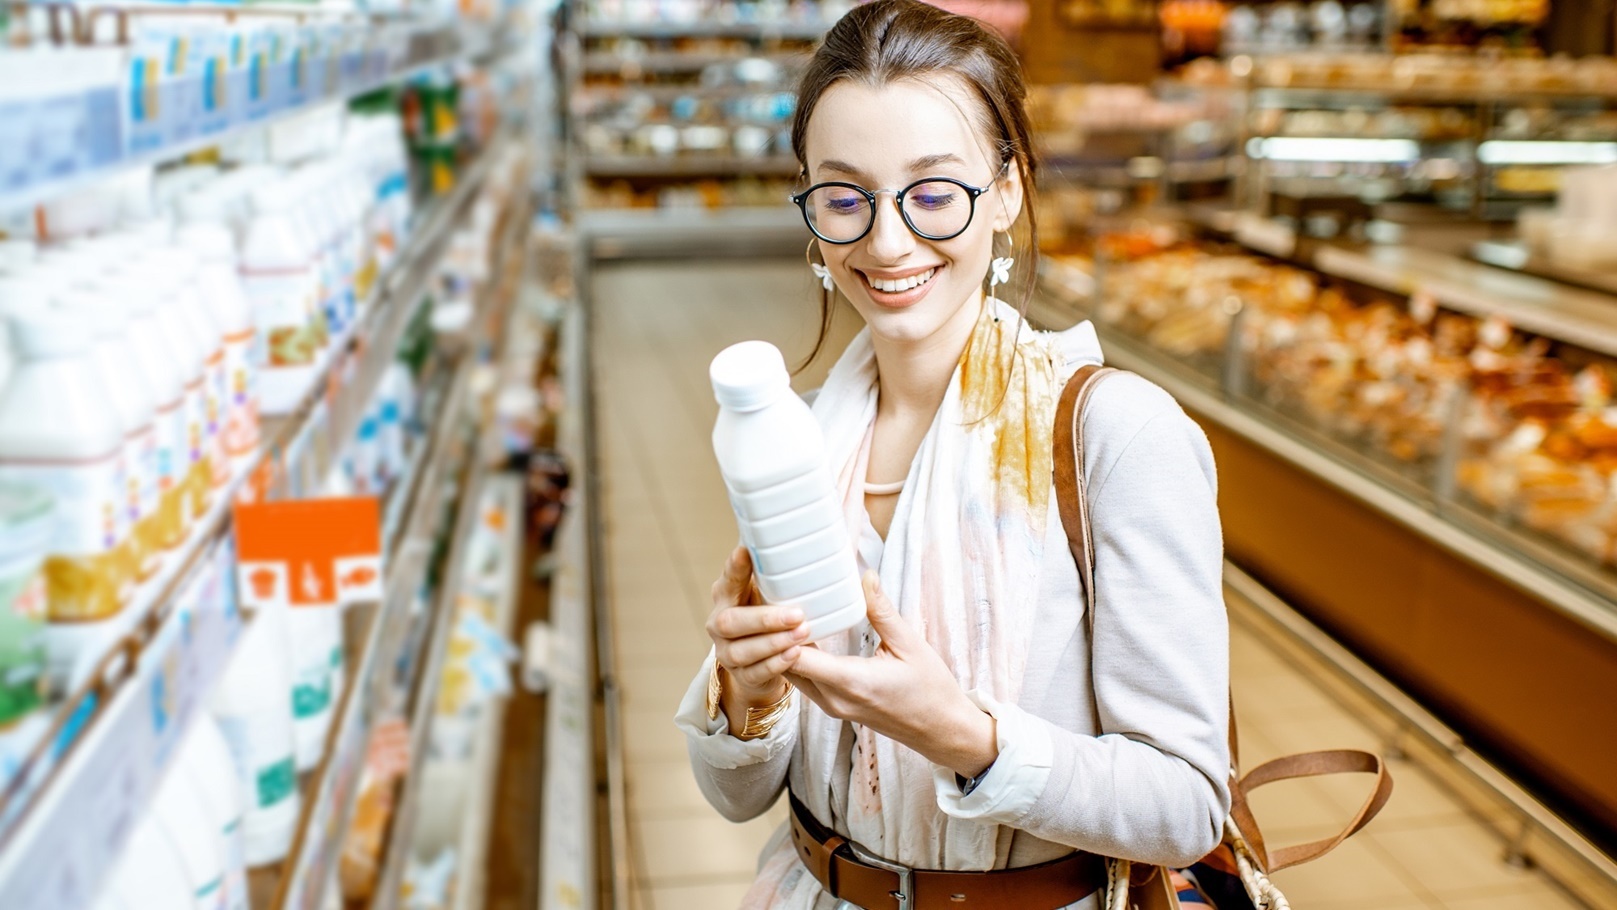 woman-buying-milk-in-the-supermarket-2022-01-19-00-17-48-utc